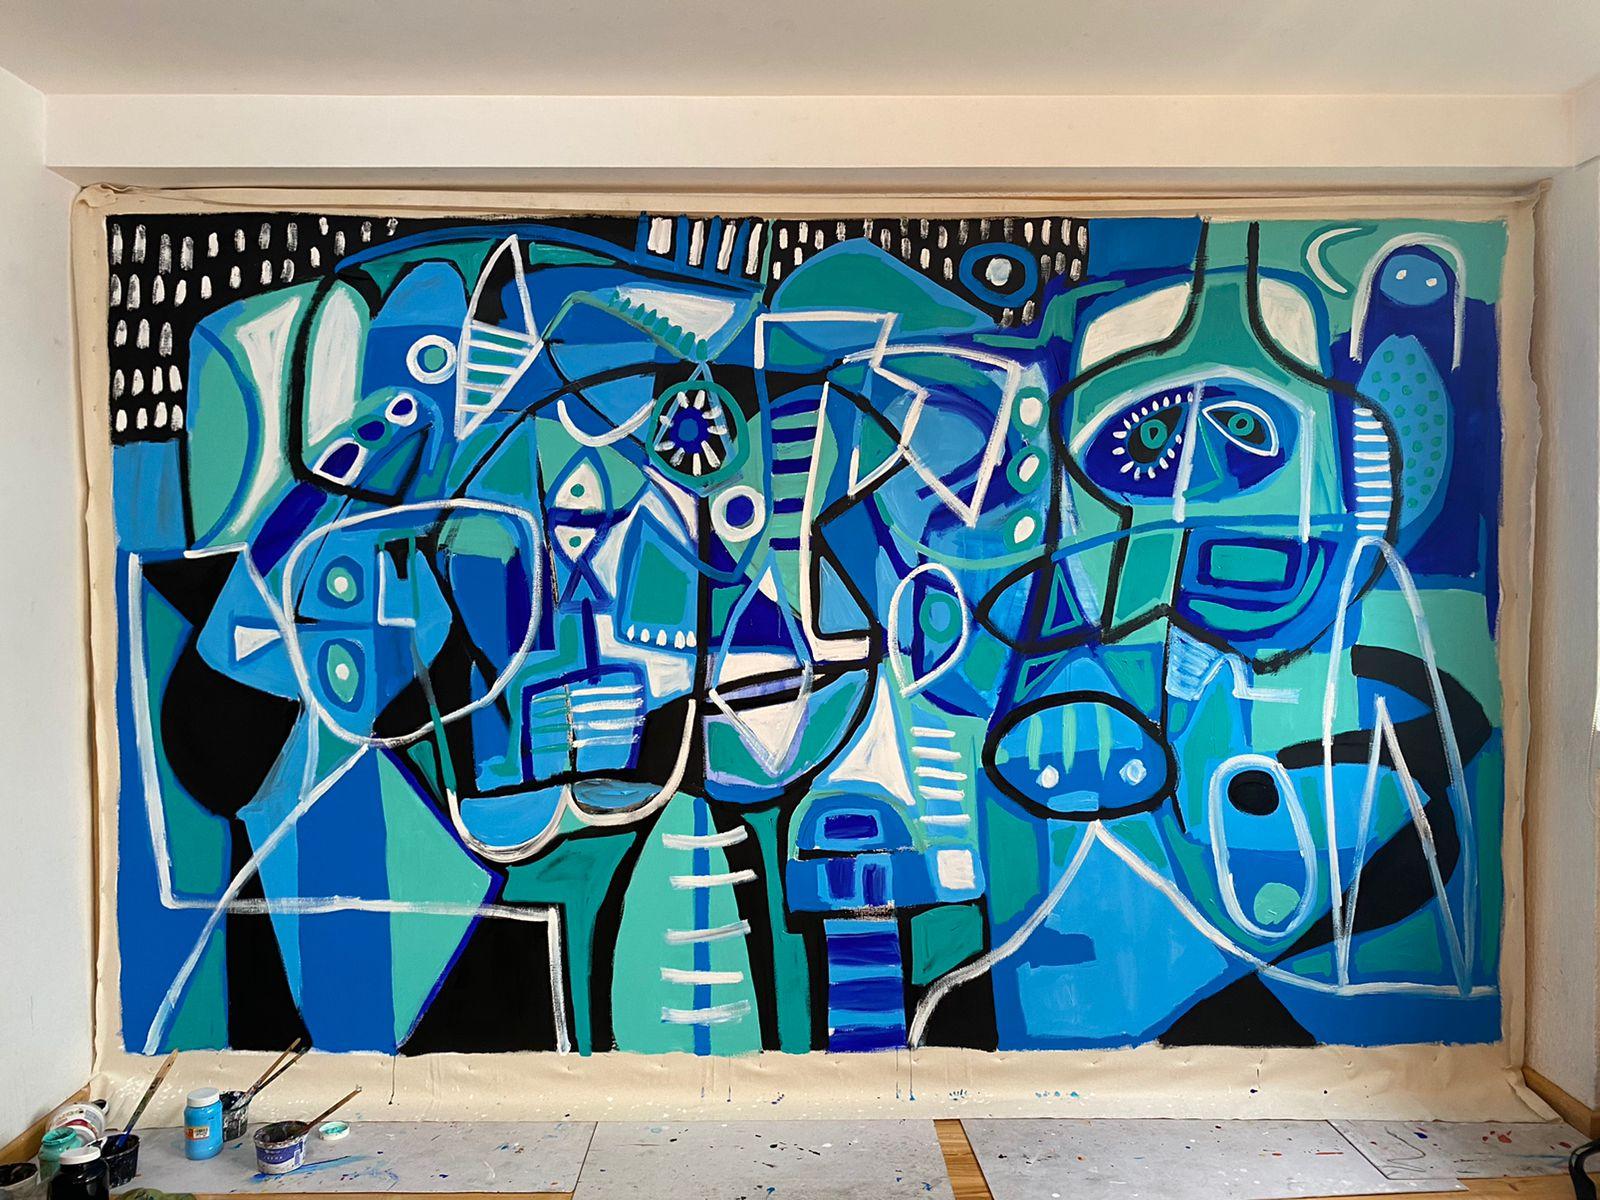 Contemporary Art, Abstract Painting
Acrylic on canvas
215x325cm
Signed 
Ships rolled up


About the artist
Enrique Pichardo (Mexico City, 1973) graduated from Escuela Nacional de Pintura, Escultura y Grabado (ENPEG) “La Esmeralda”. As a Mexican